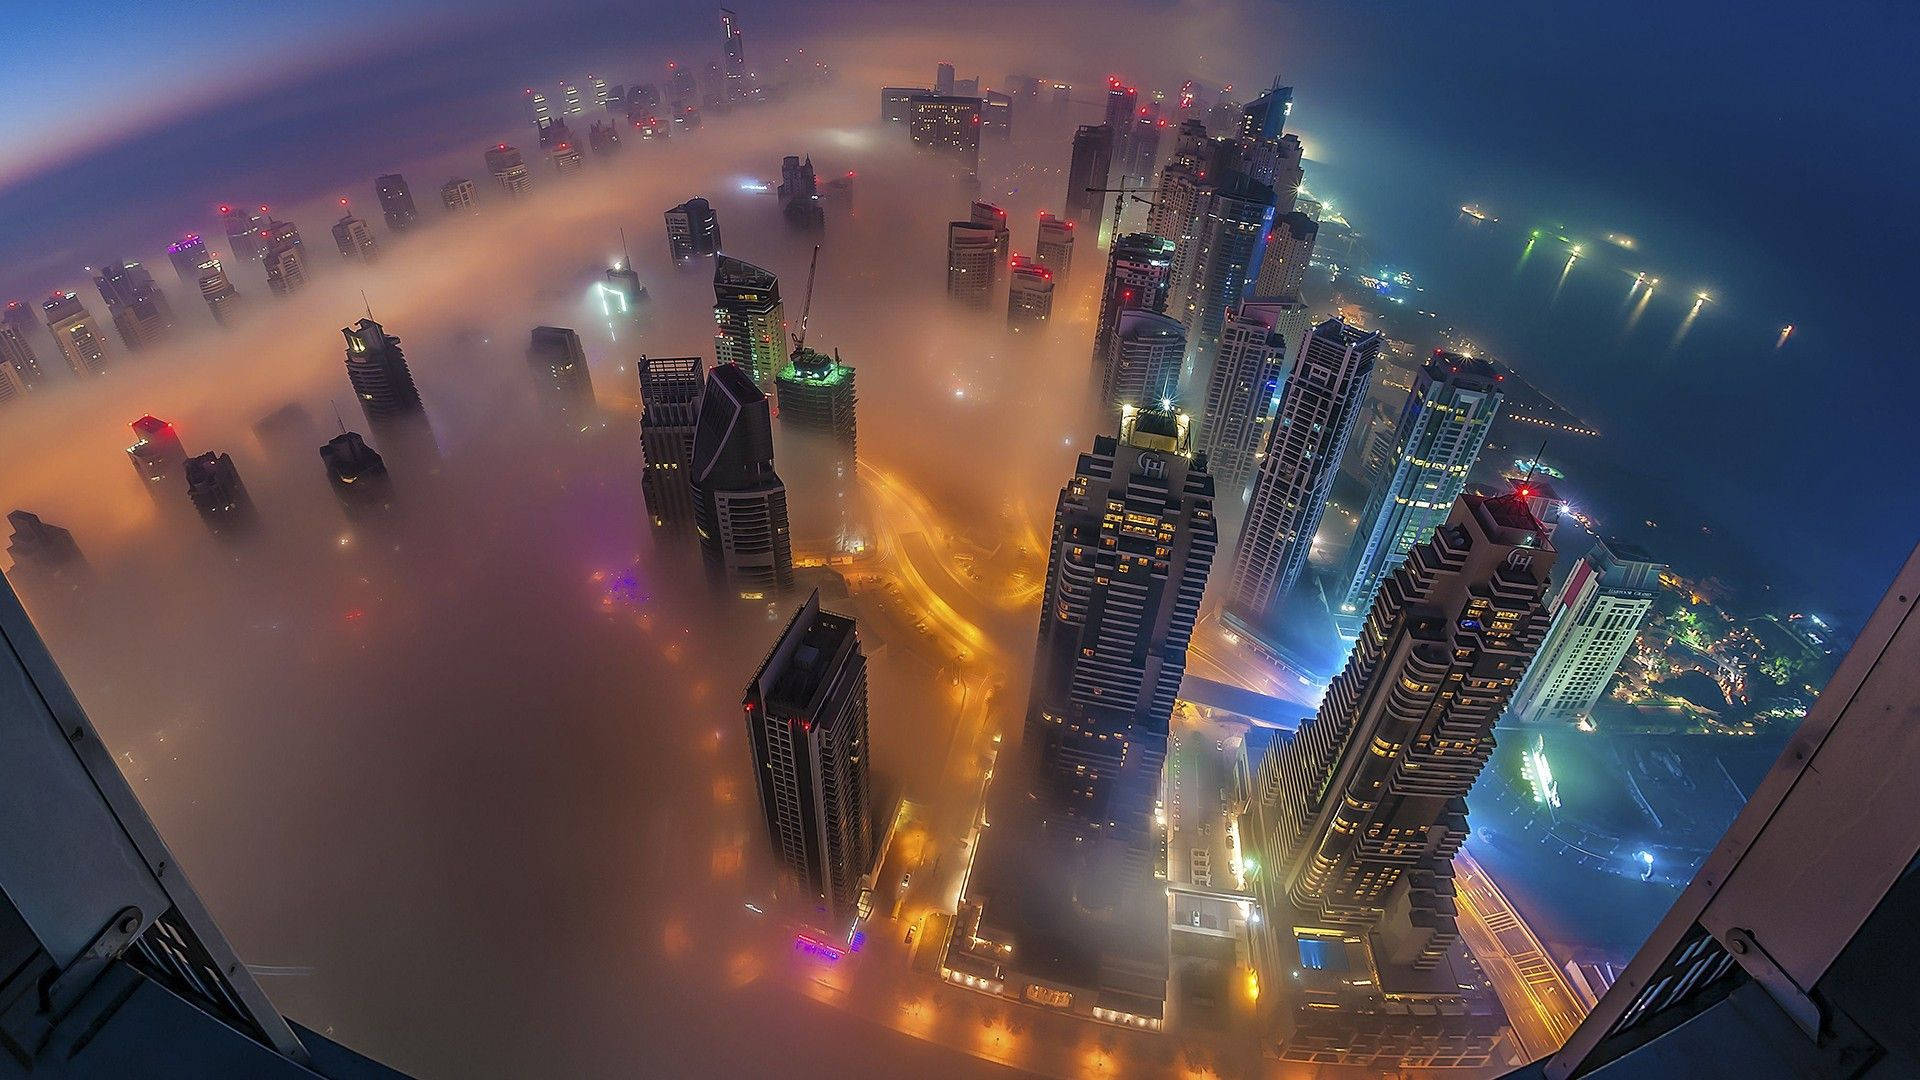 Windows 10 Hd City Fog Background